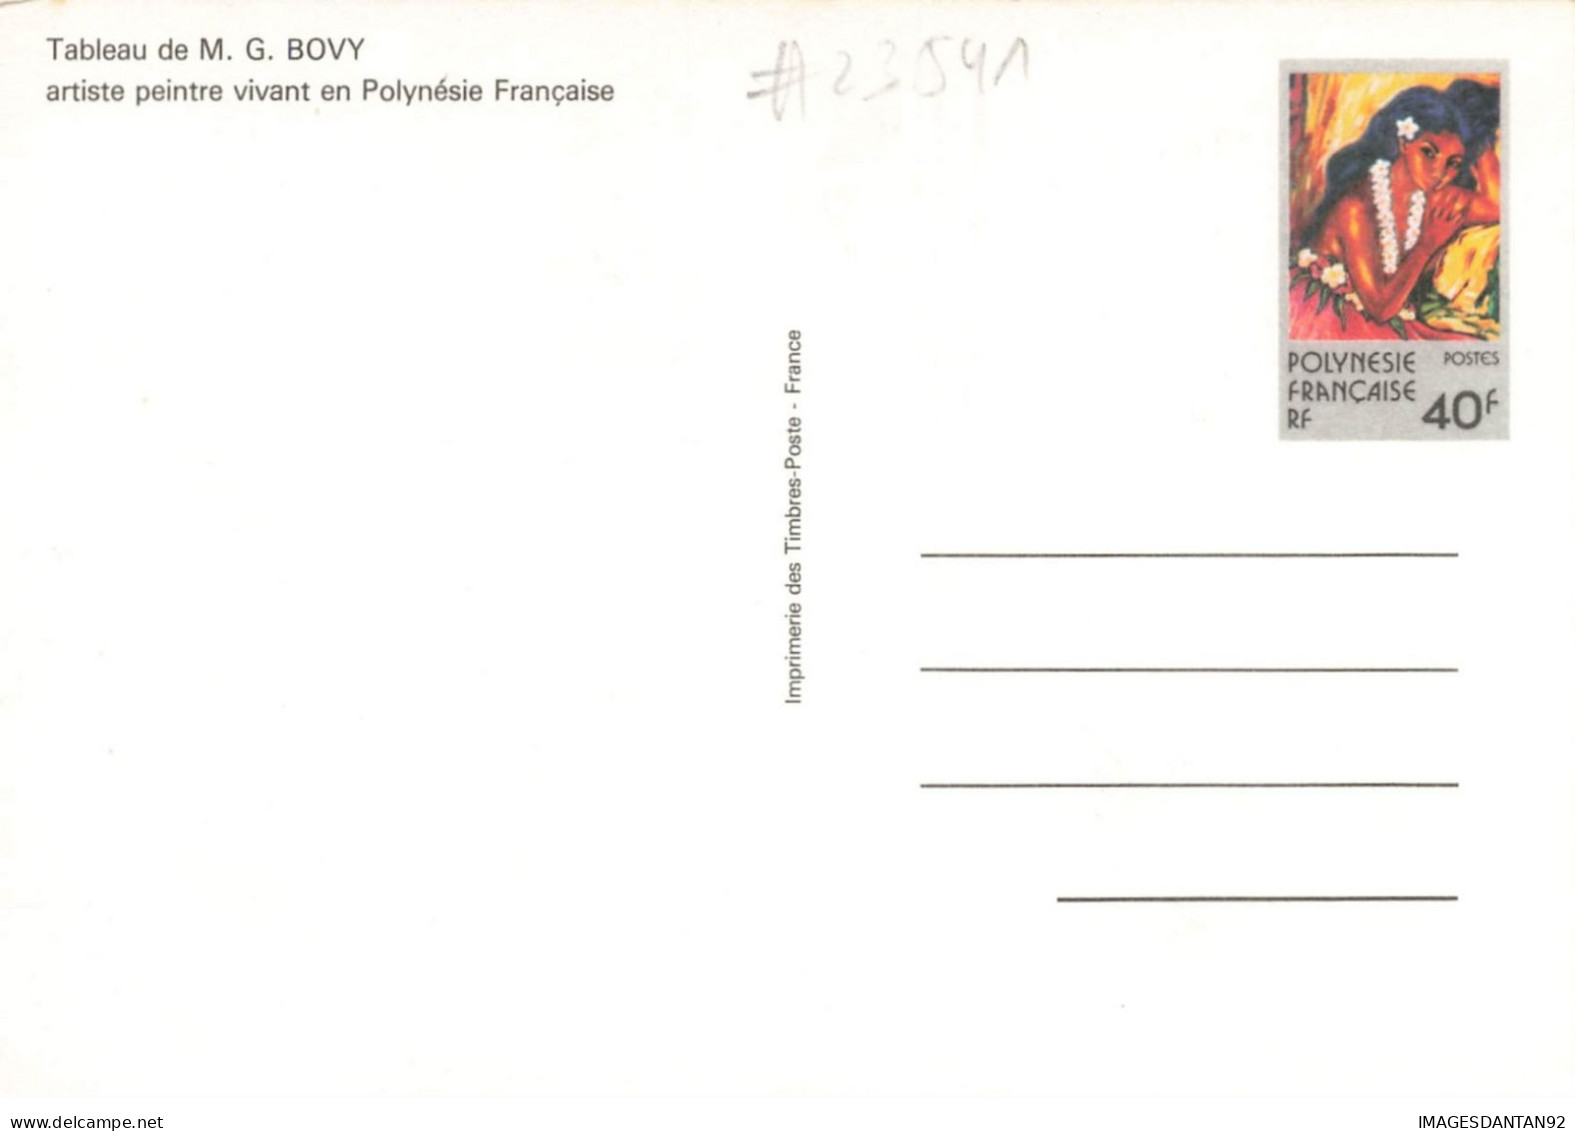 ENTIER POSTAL #23541 POLYNESIE FRANCAISE TABLEAU DE BOVY ARTISTE PEINTRE - Postal Stationery